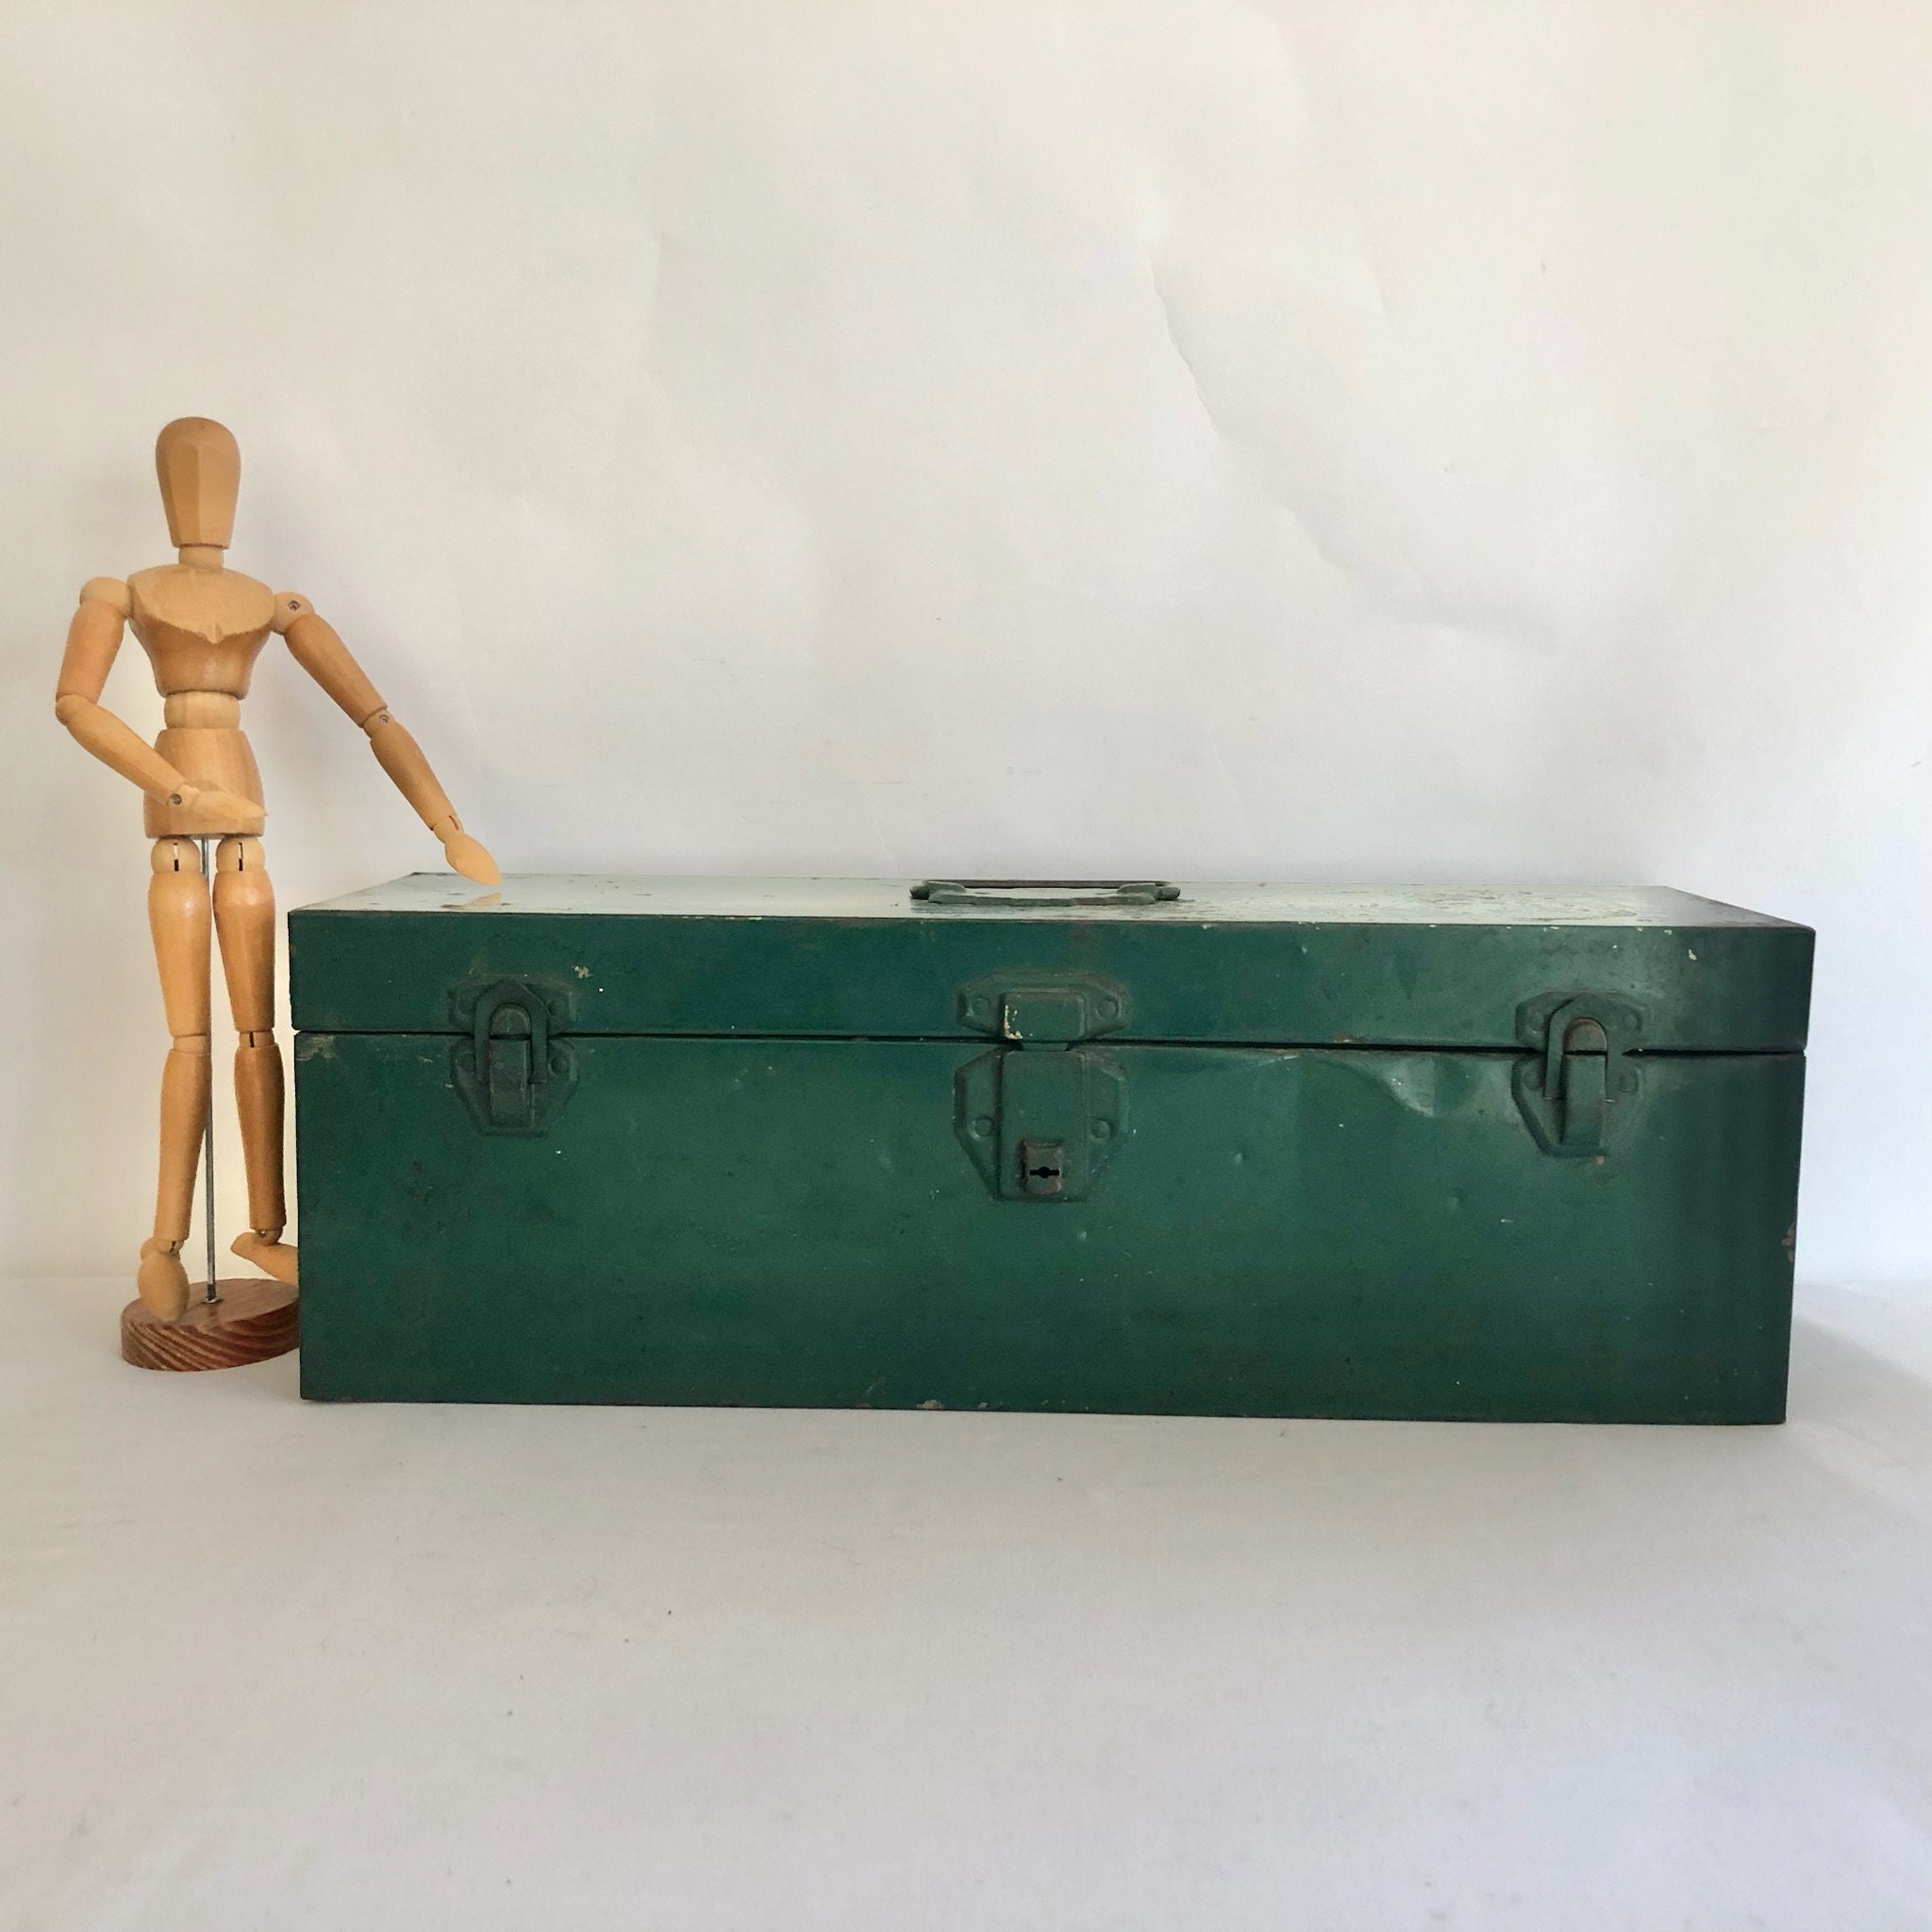 Wonderful Vintage Silver VICTOR Metal Tackle Box / Tool Box Farmhouse,  Vintage Metal Box, Industrial, Garage, Mancave, Vintage Storage 